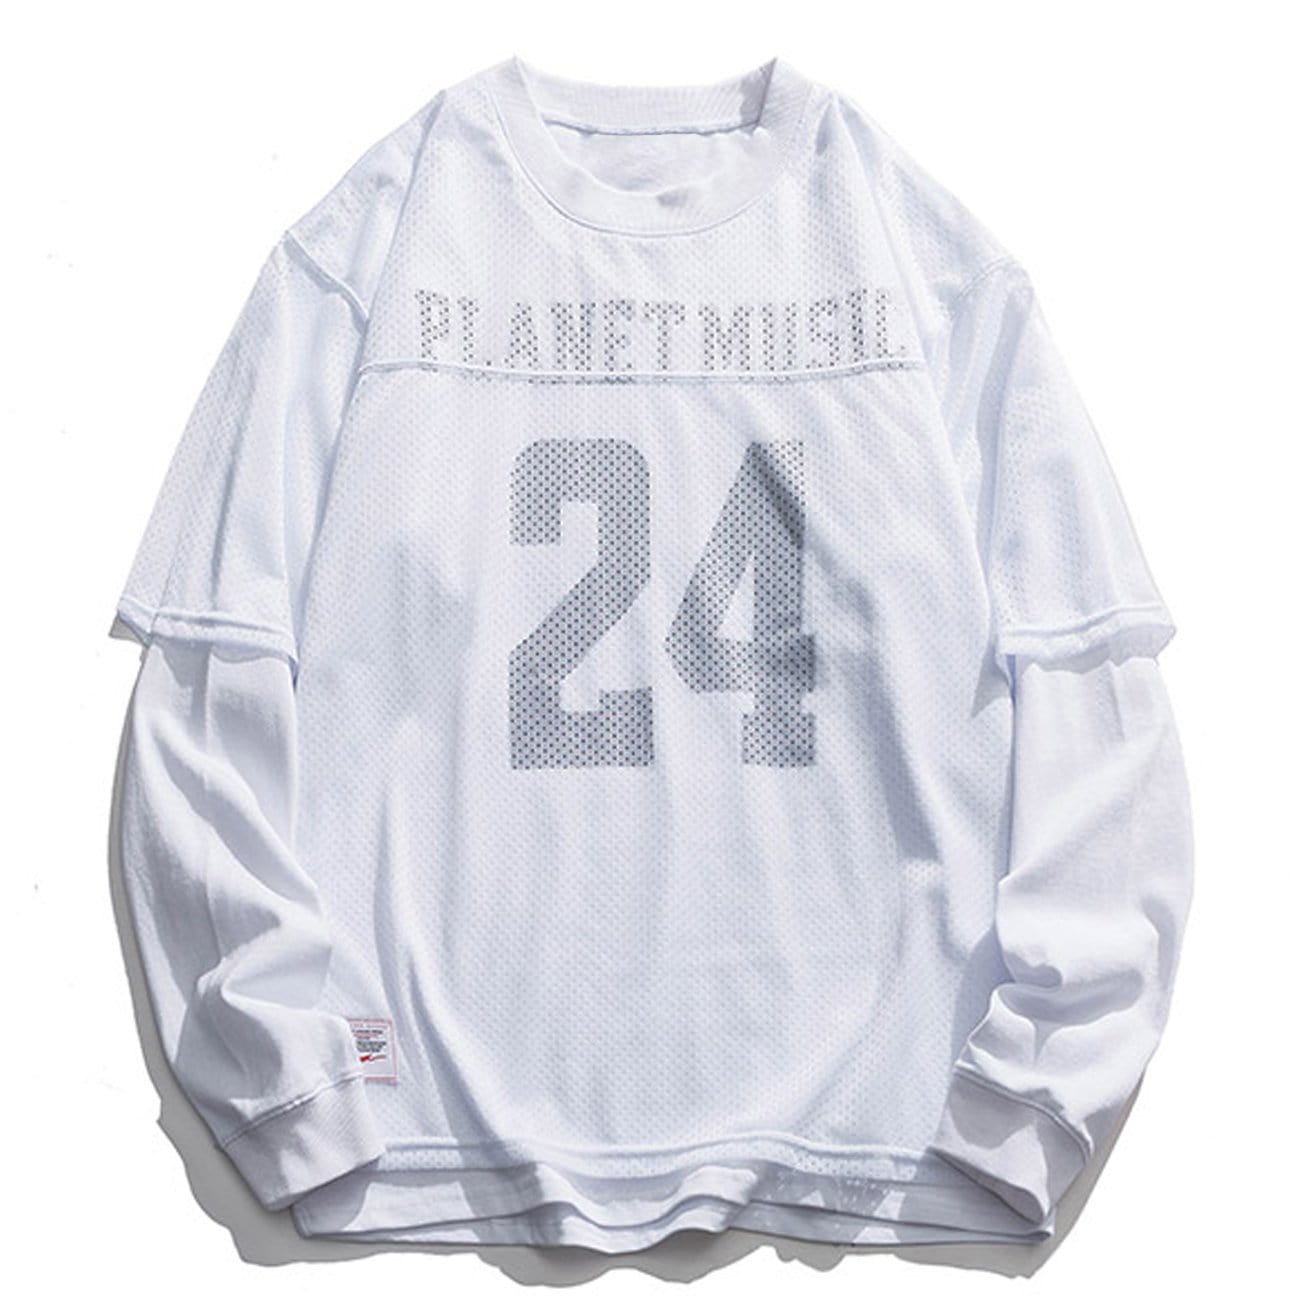 "24 Number" Sweatshirt Streetwear Brand Techwear Combat Tactical YUGEN THEORY